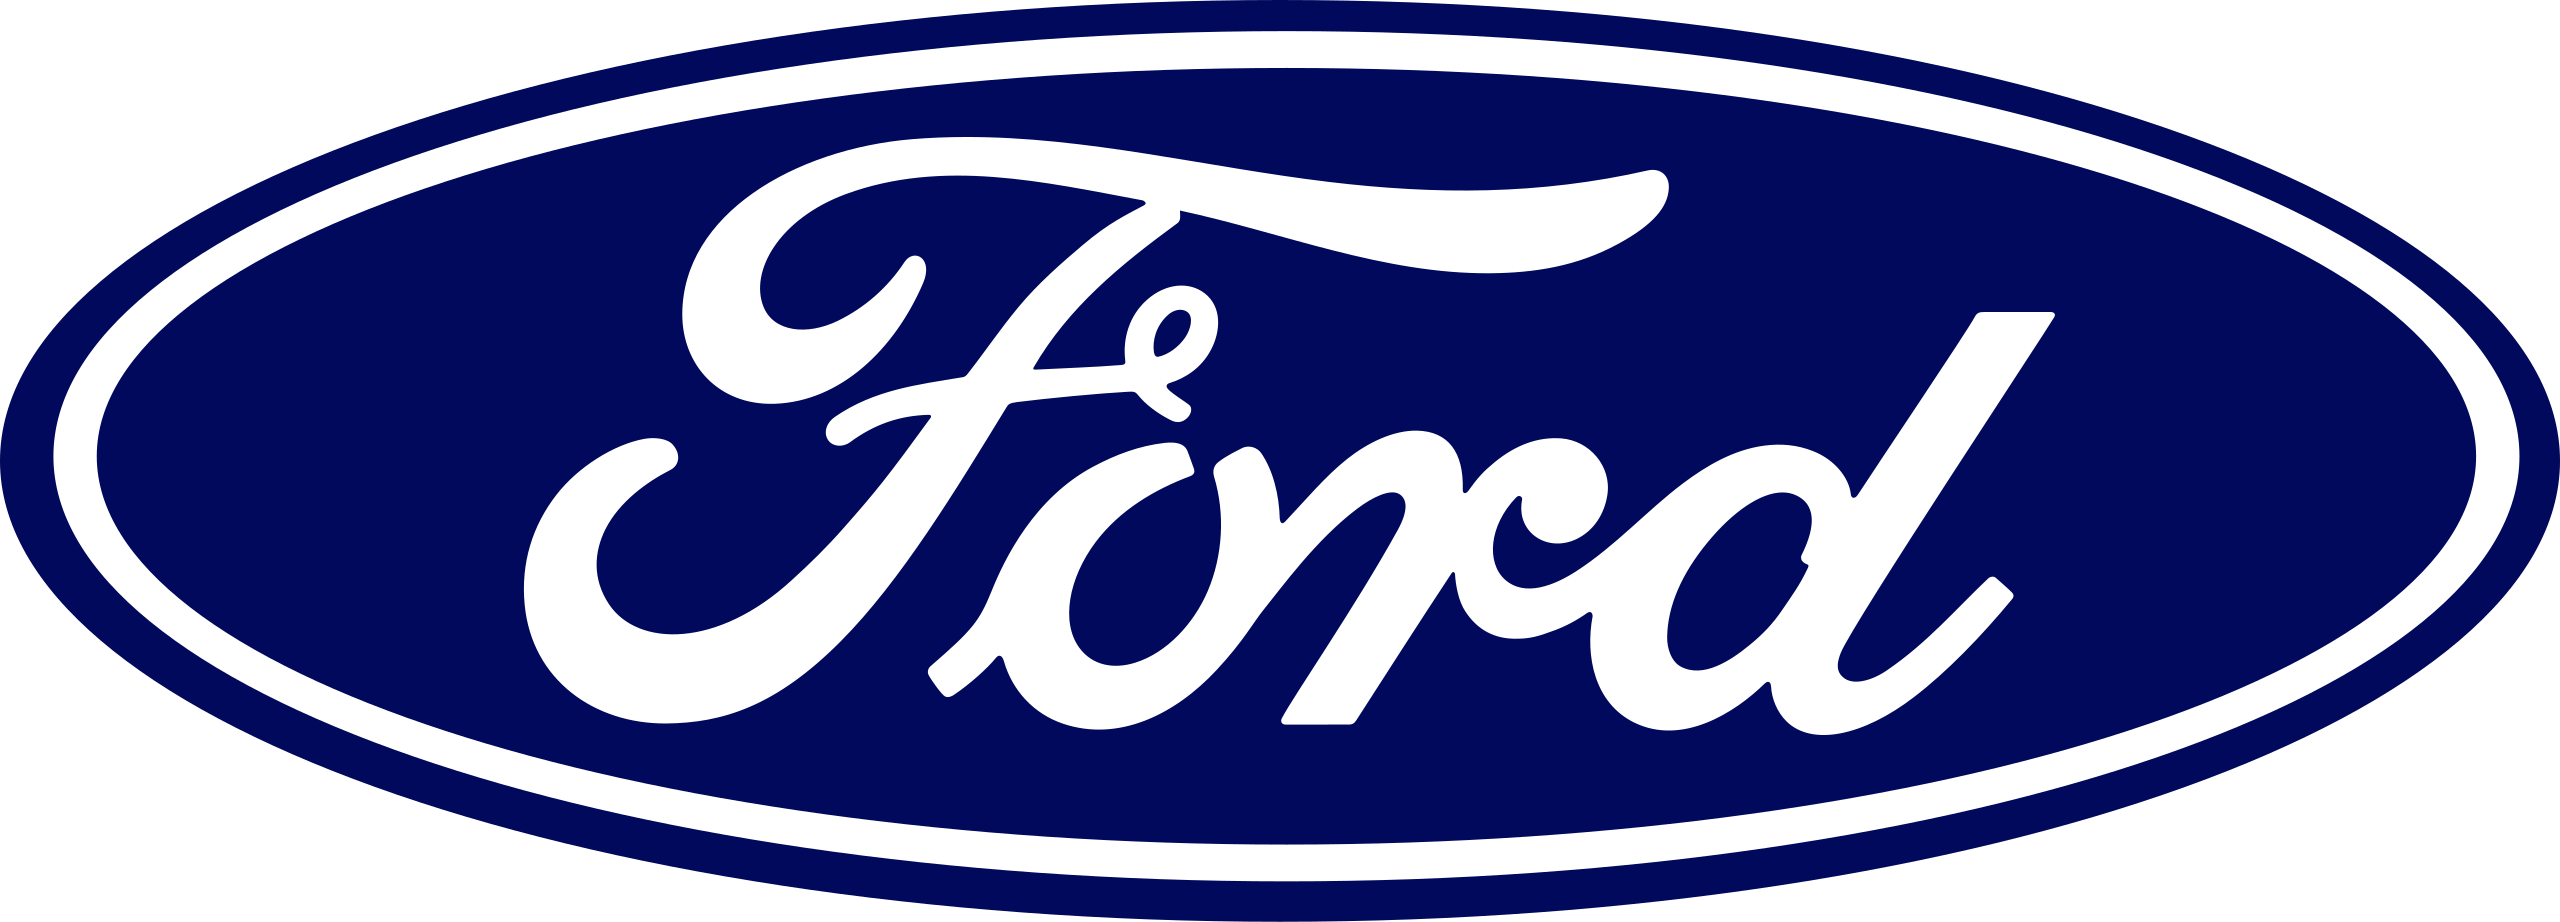 Ford-logo-pricefx